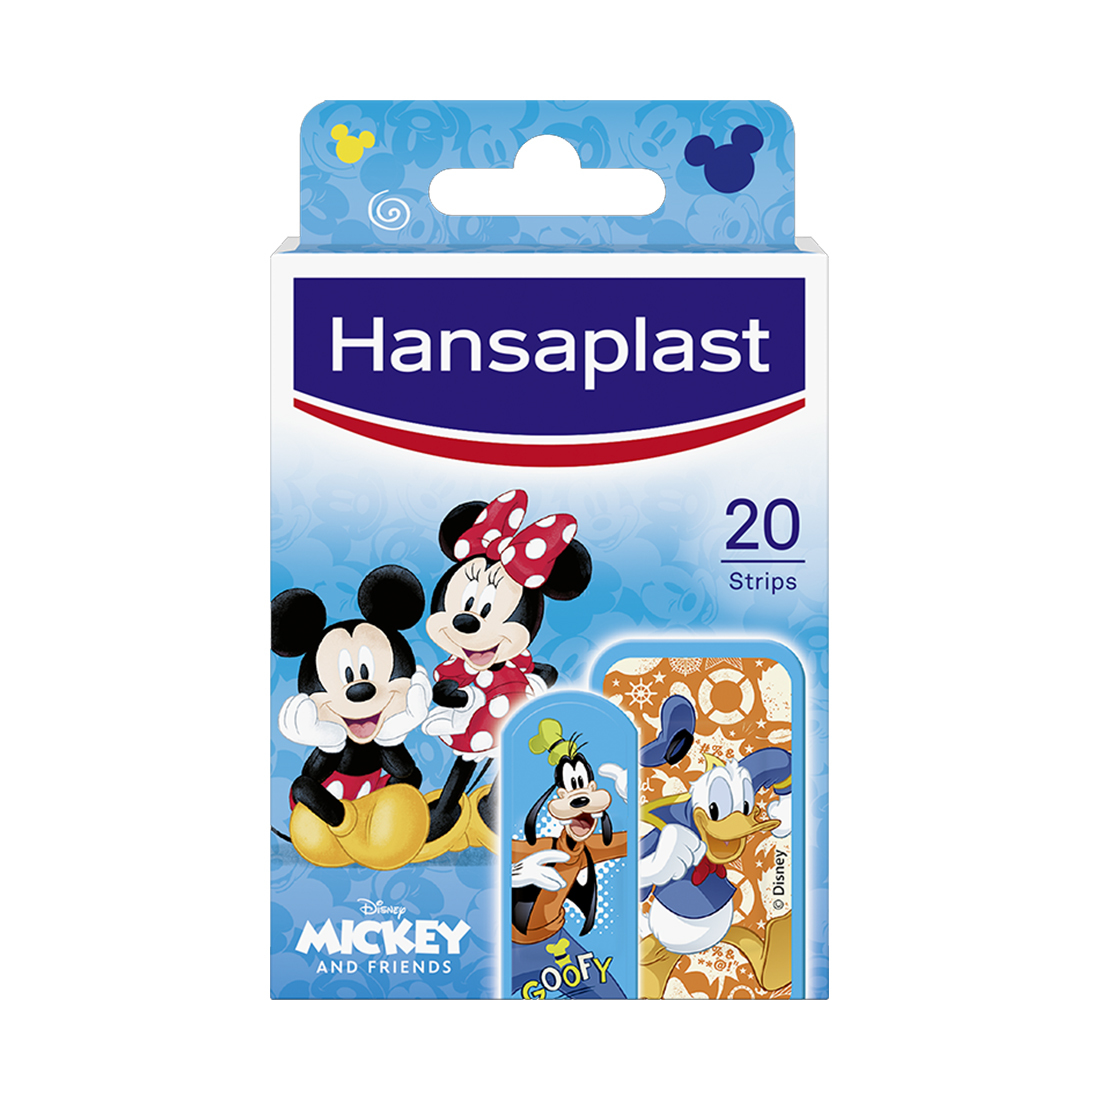 Hansaplast Disney's Mickey and Friends Kids Plaster - 20 Strips - $9.00